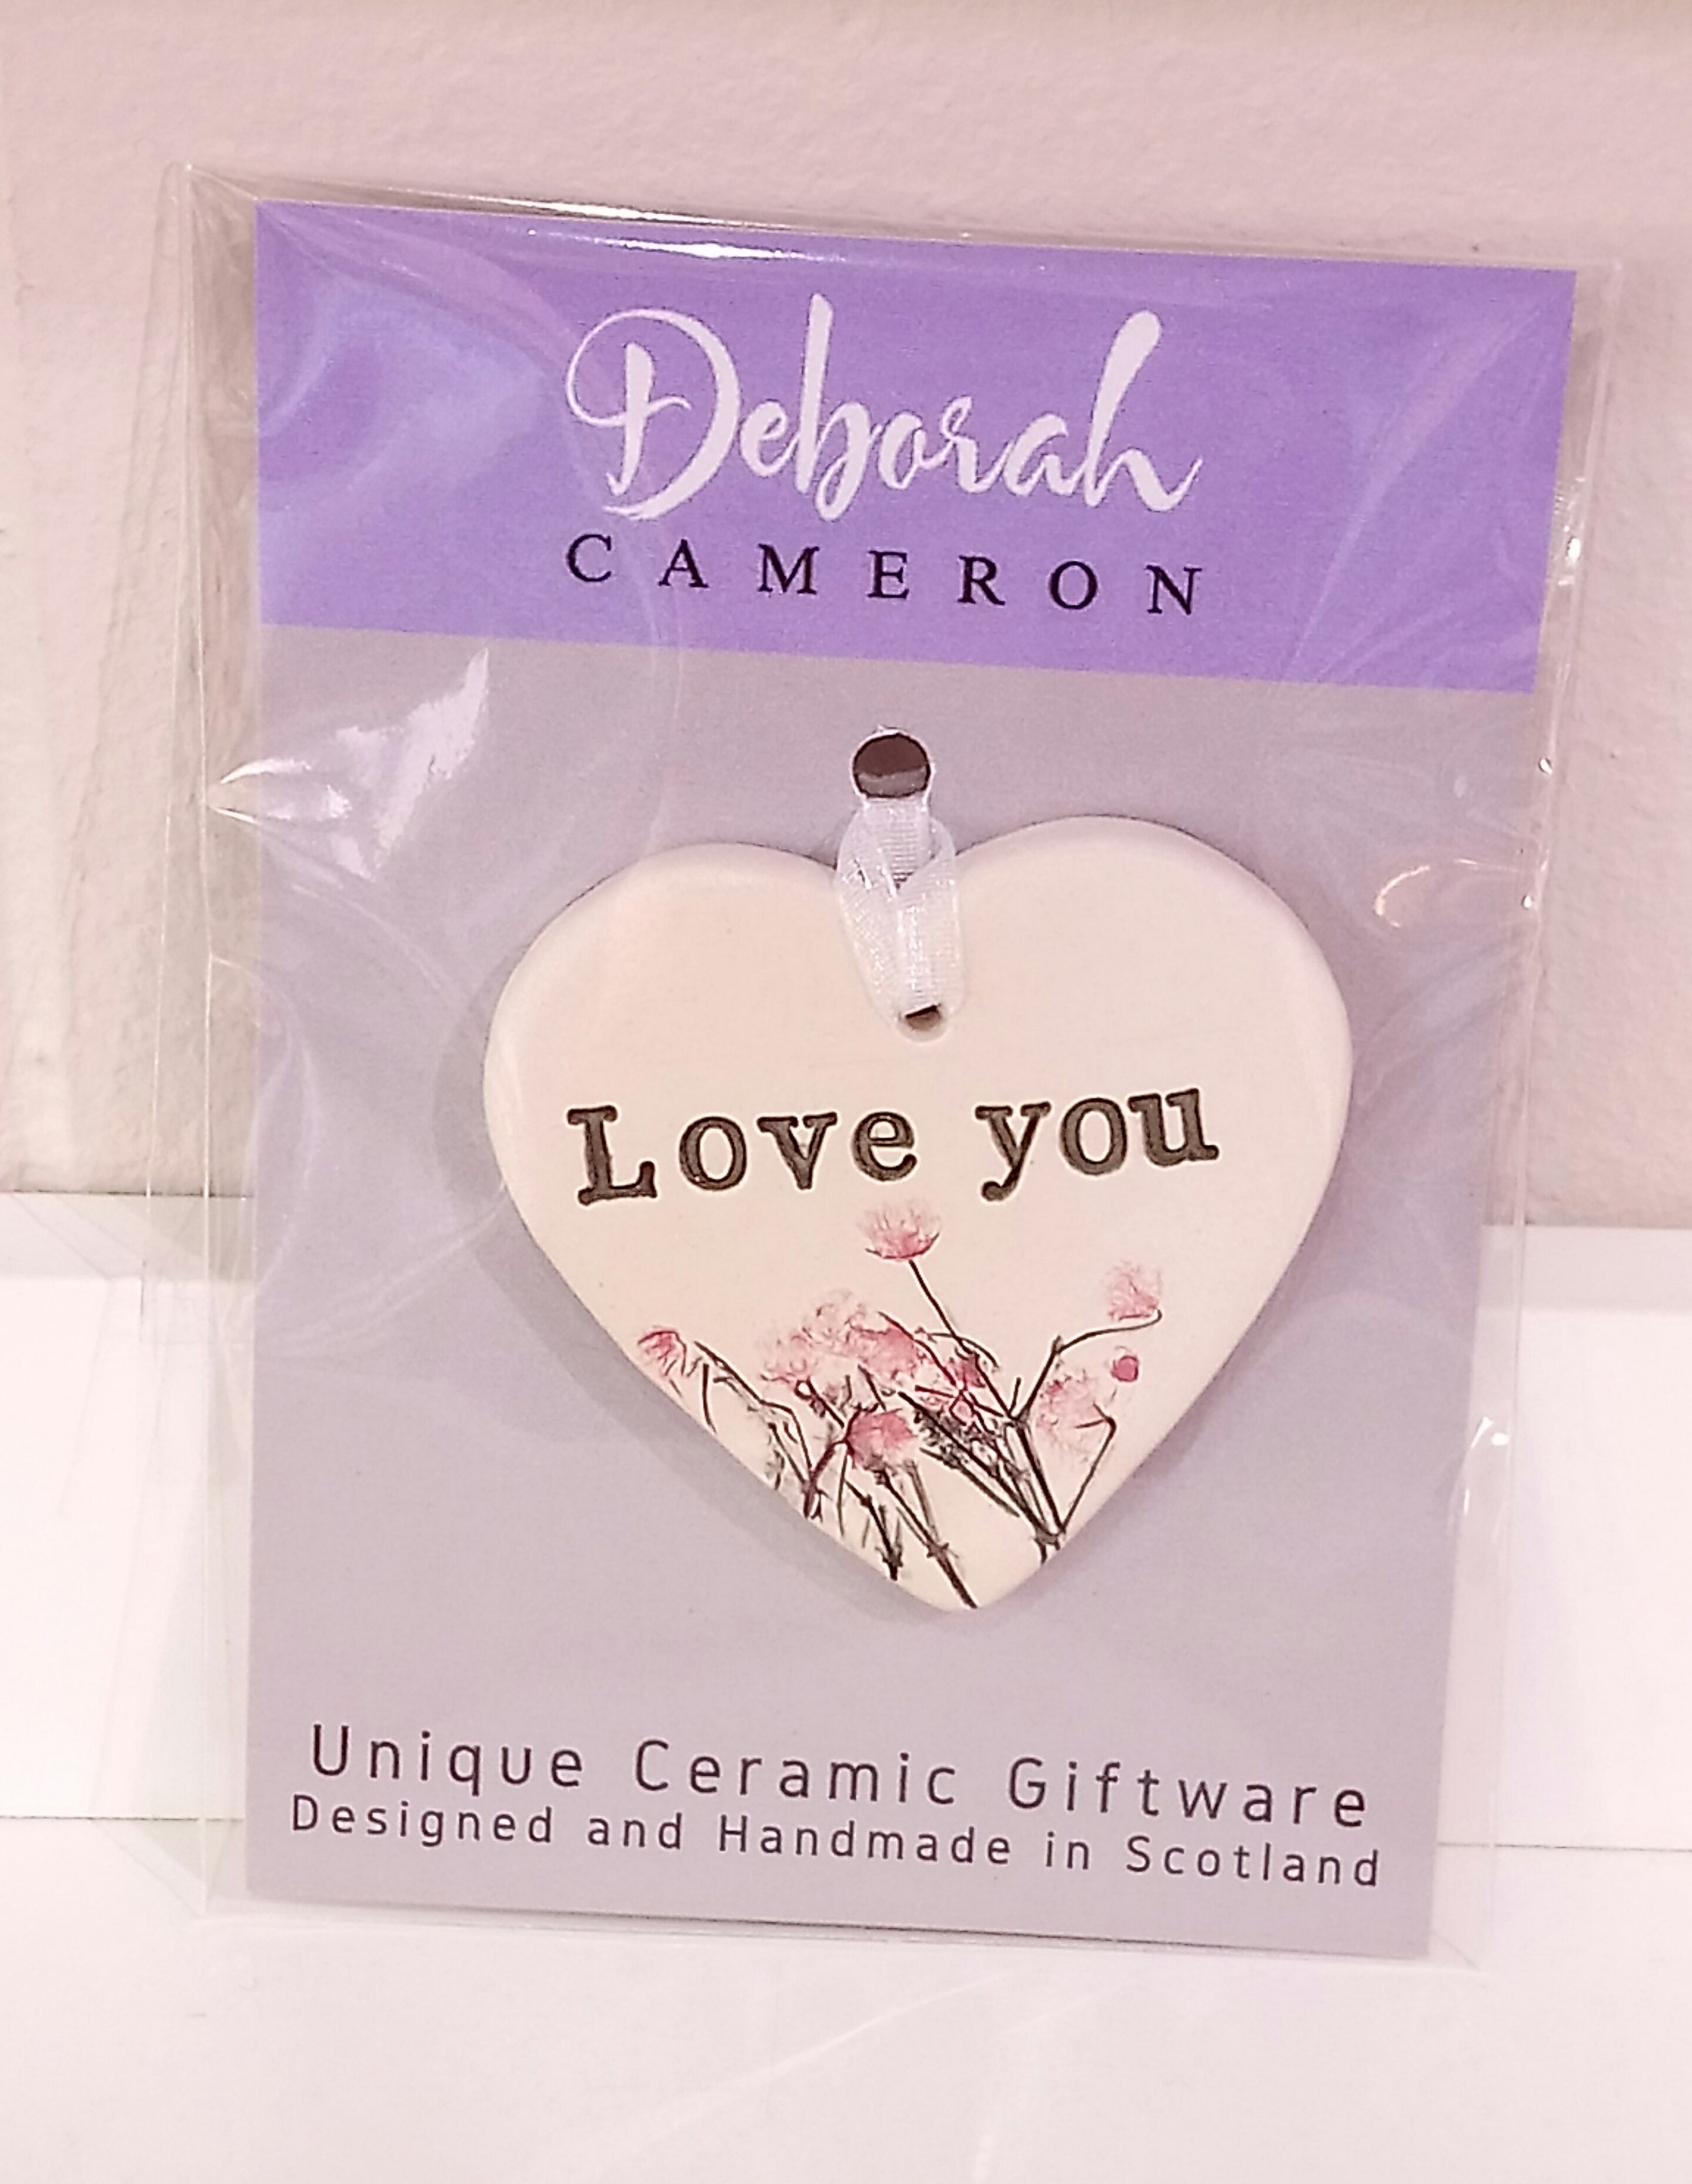 'Love You' Keepsake Ceramic Heart Handmade by Deborah Cameron - Made in Scotland